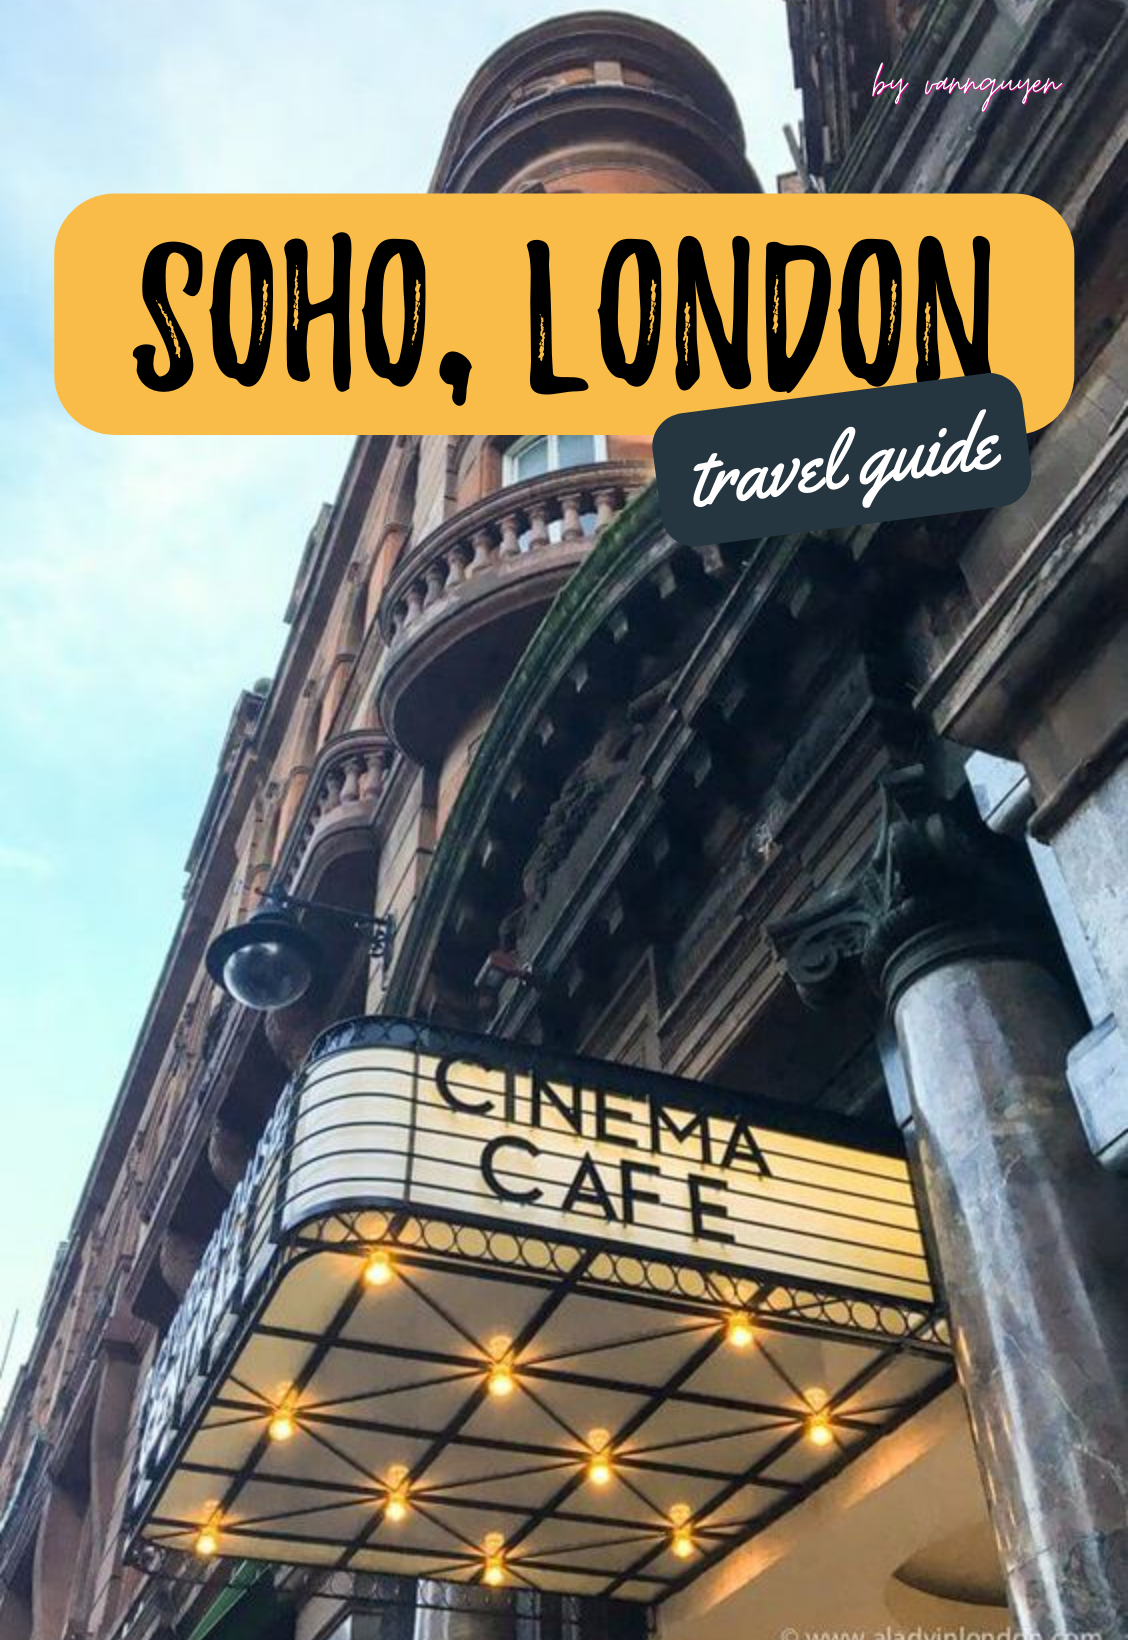 Soho, London: A detailed travel guide